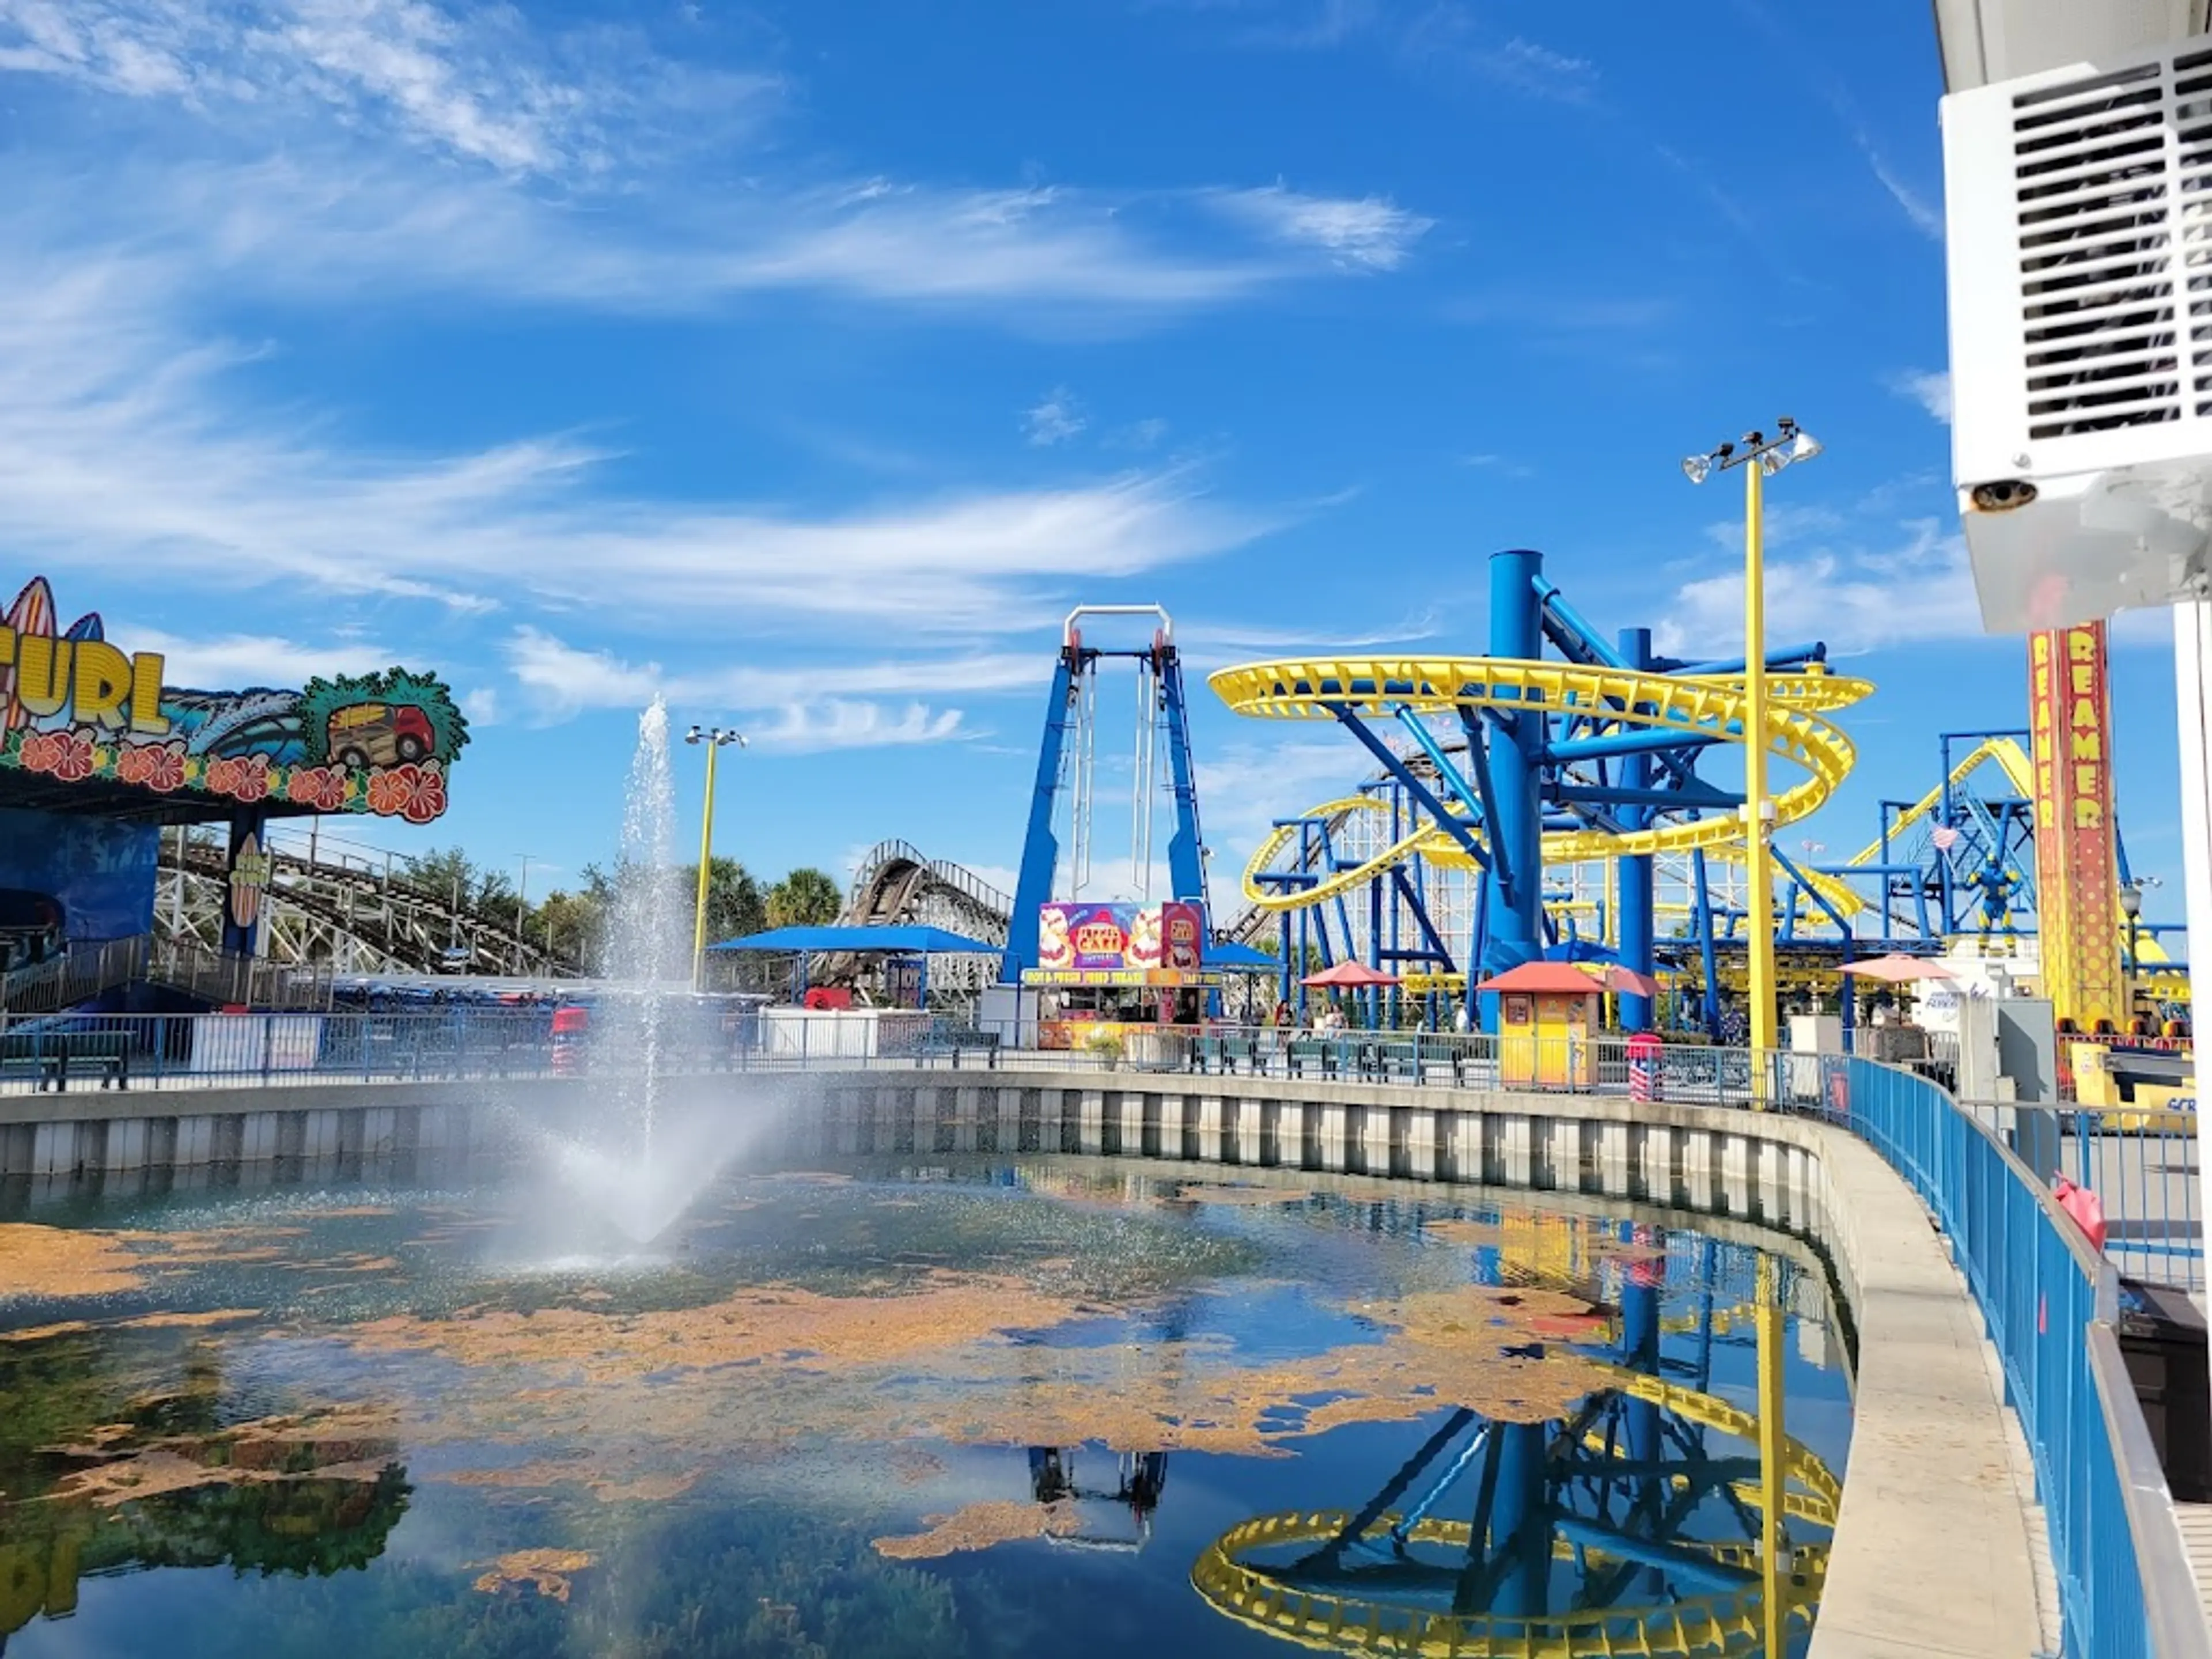 Theme park in Orlando